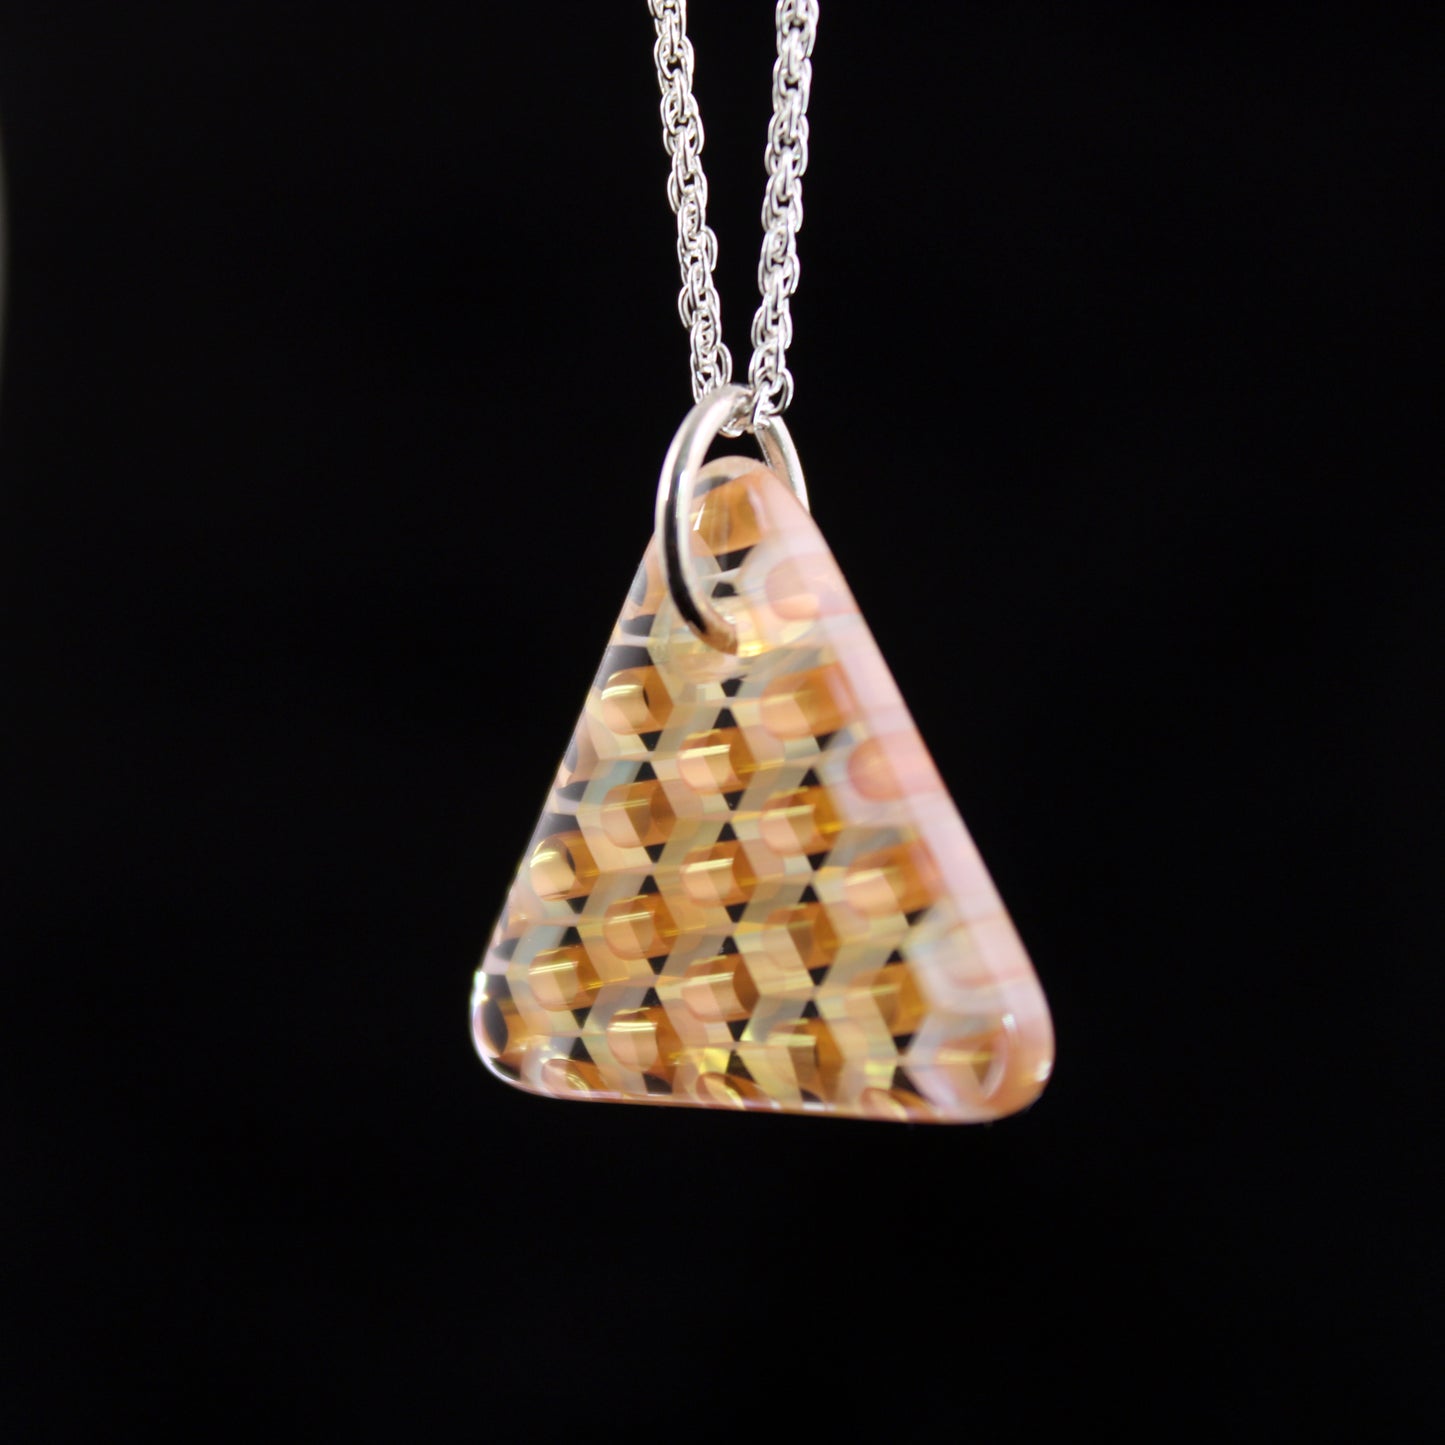 "Silhouette" Triangular Honeyglass Necklace